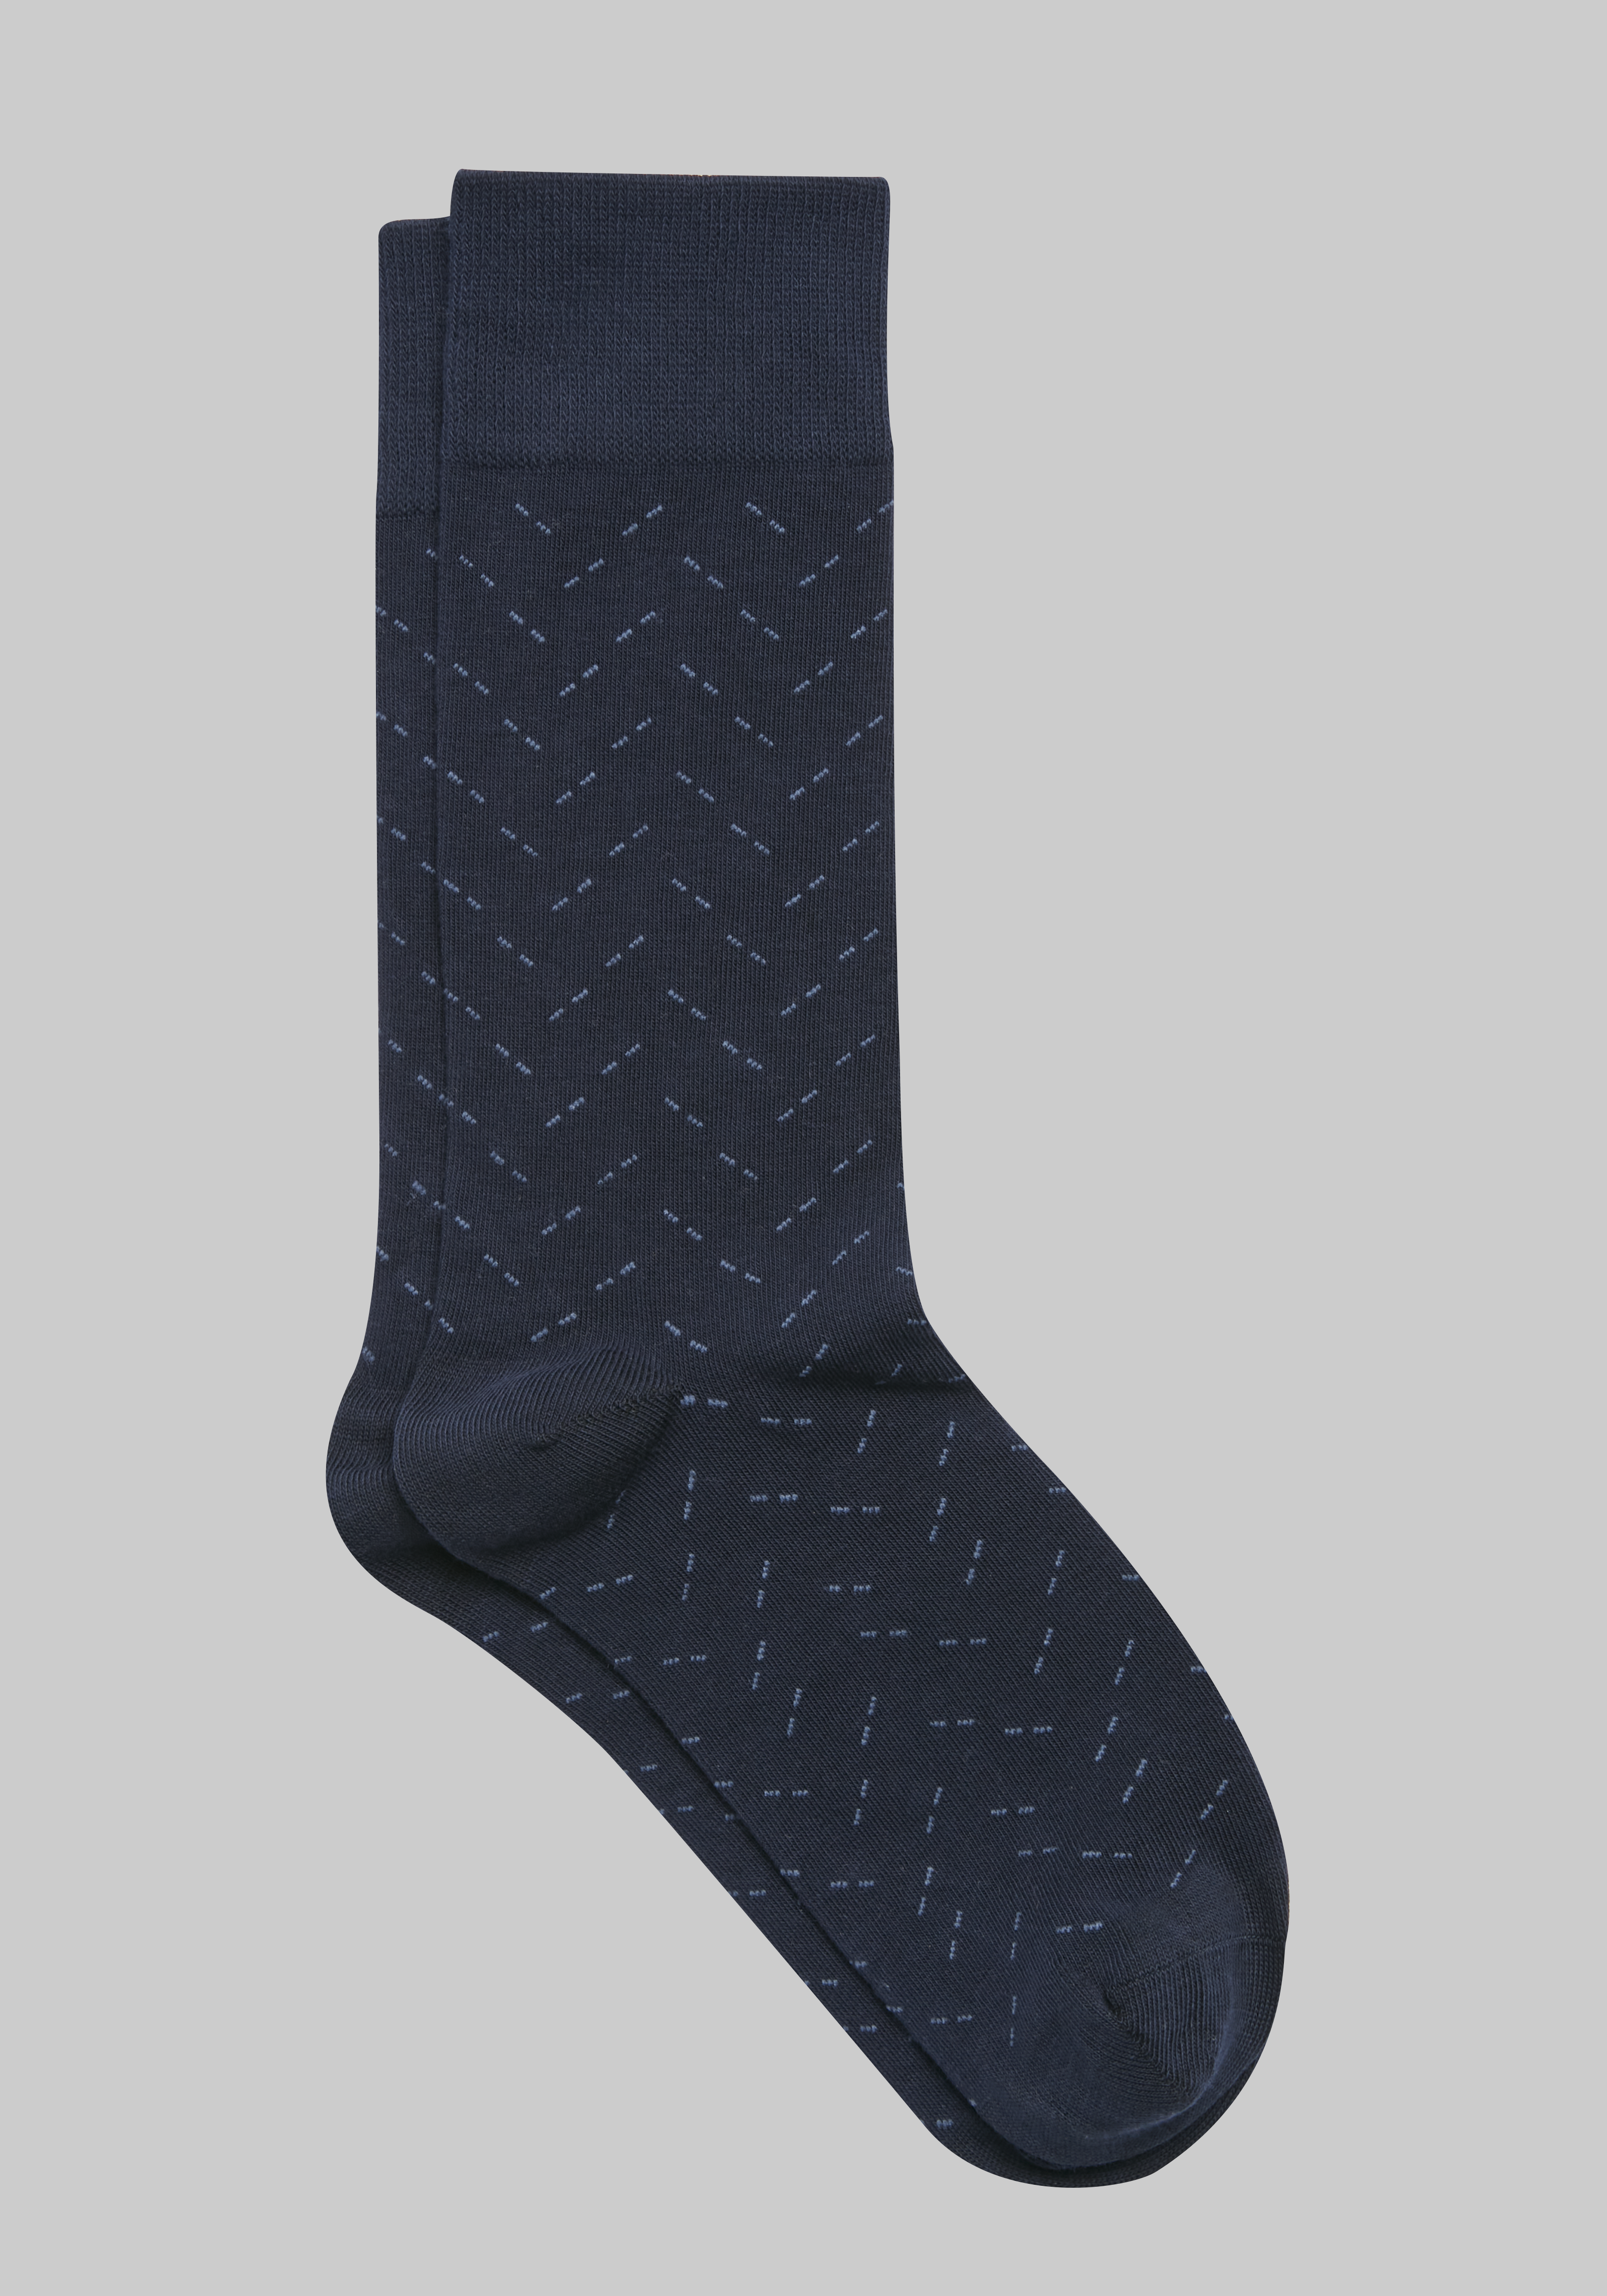 Accessories, Ankle Louis Vuitton Socks